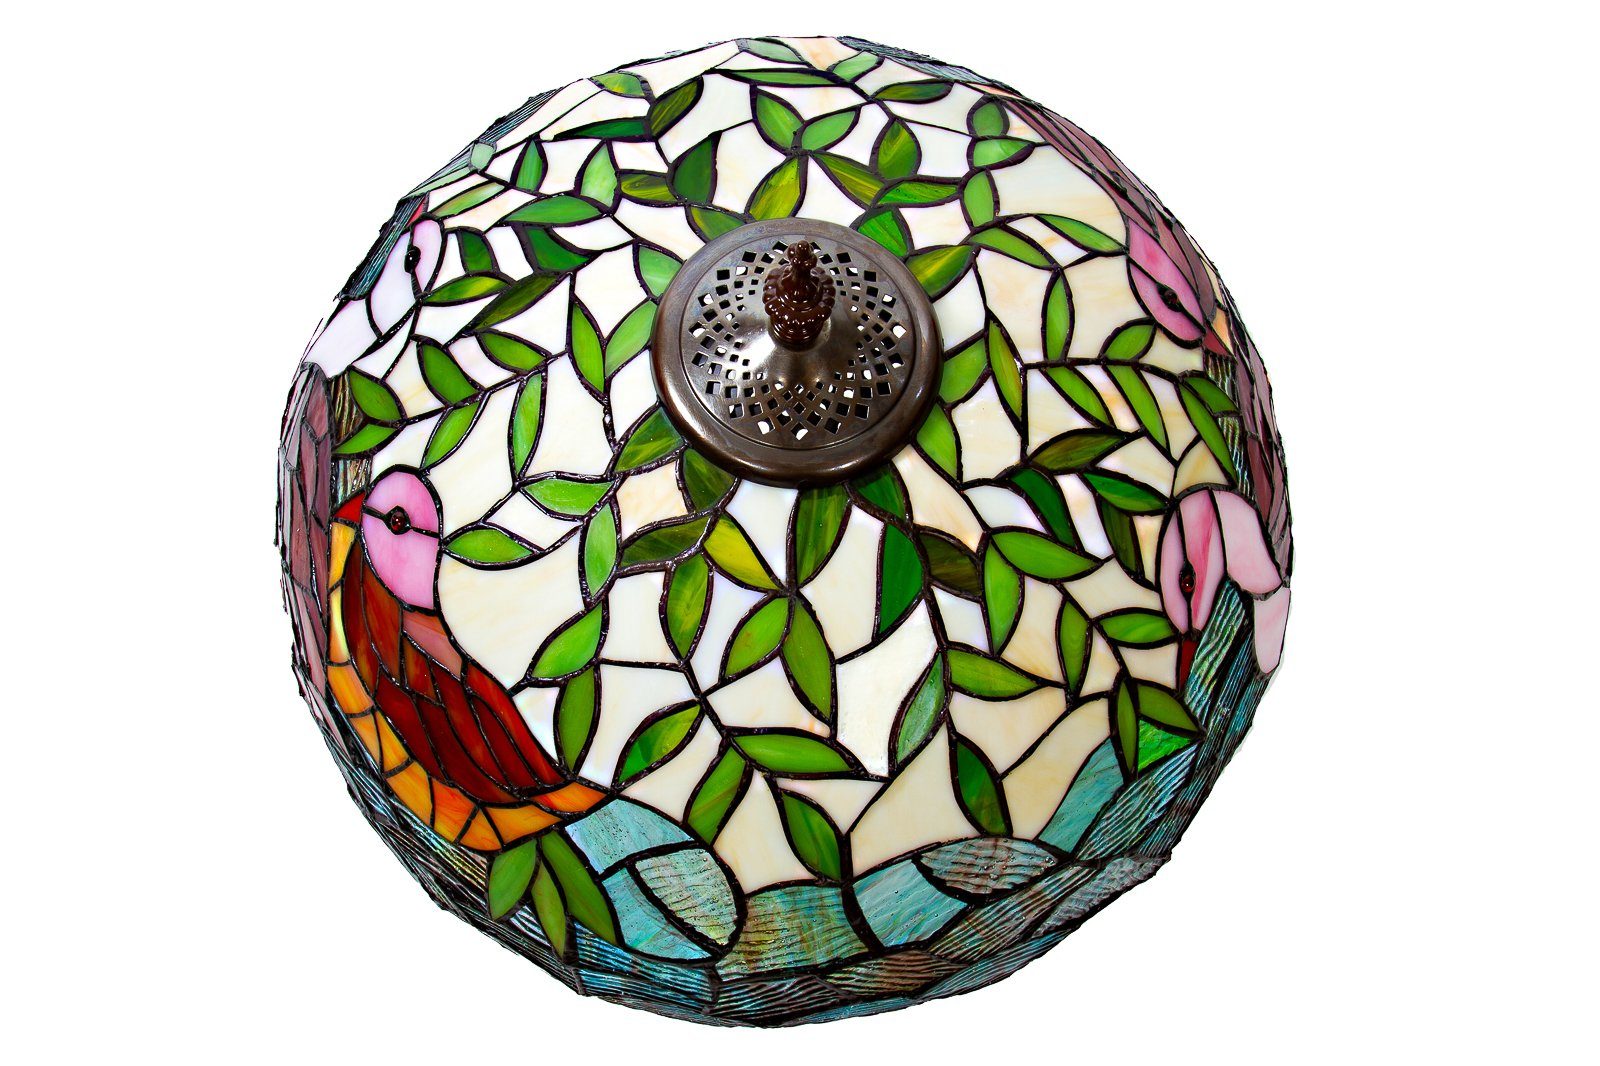 BIRENDY Stehlampe Stehlampe im Tiffany Dekorationslampe, Glaslampe Style, Stehlampe